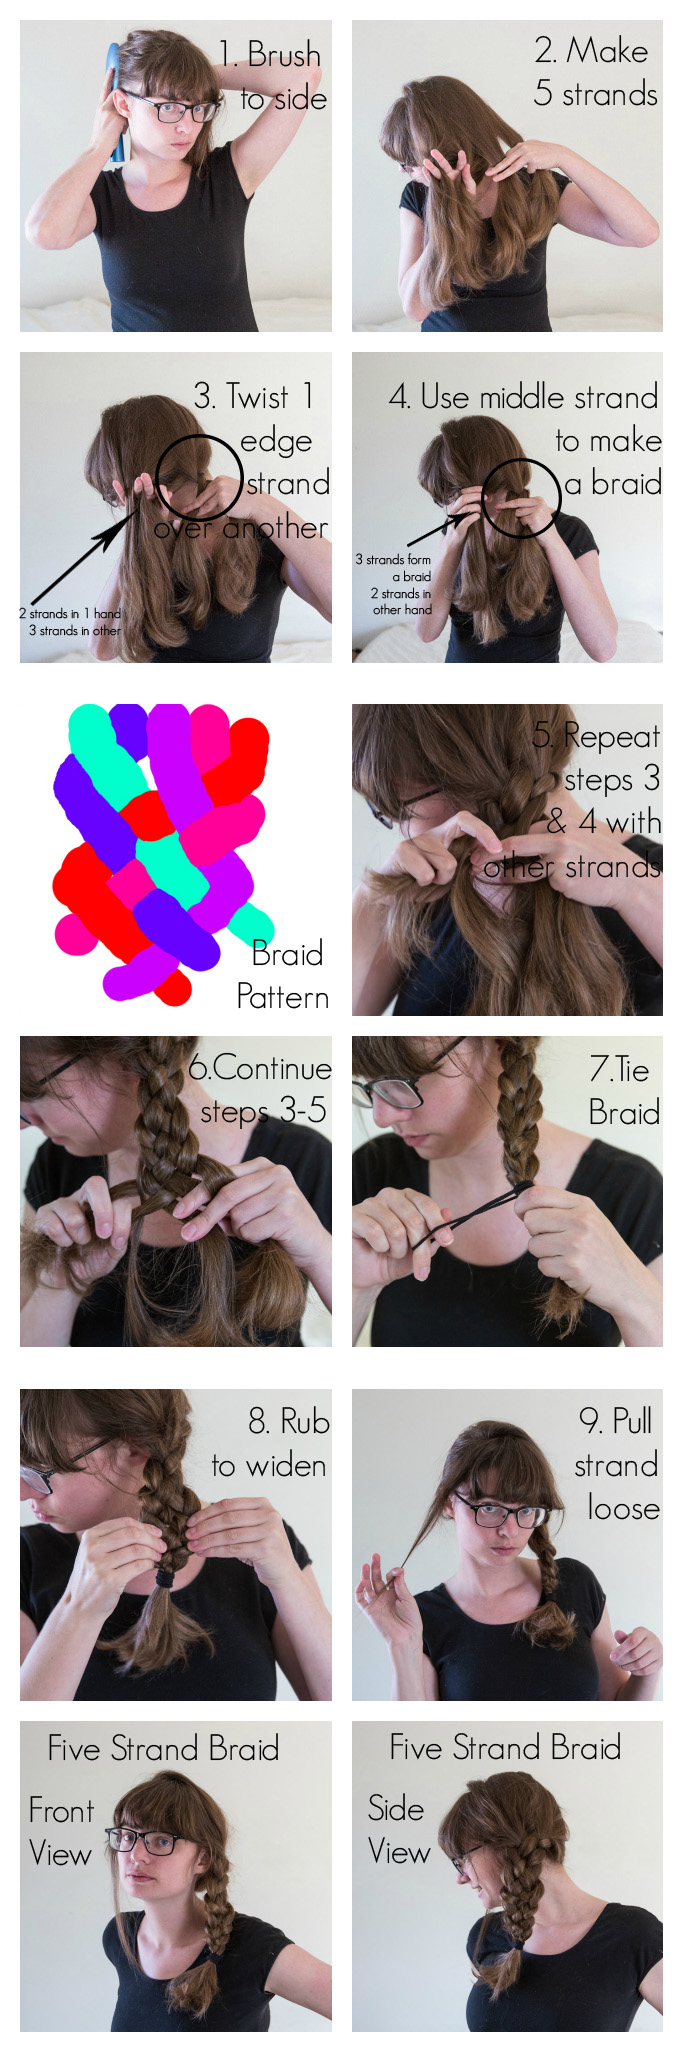 5 Strand Braid Instructions